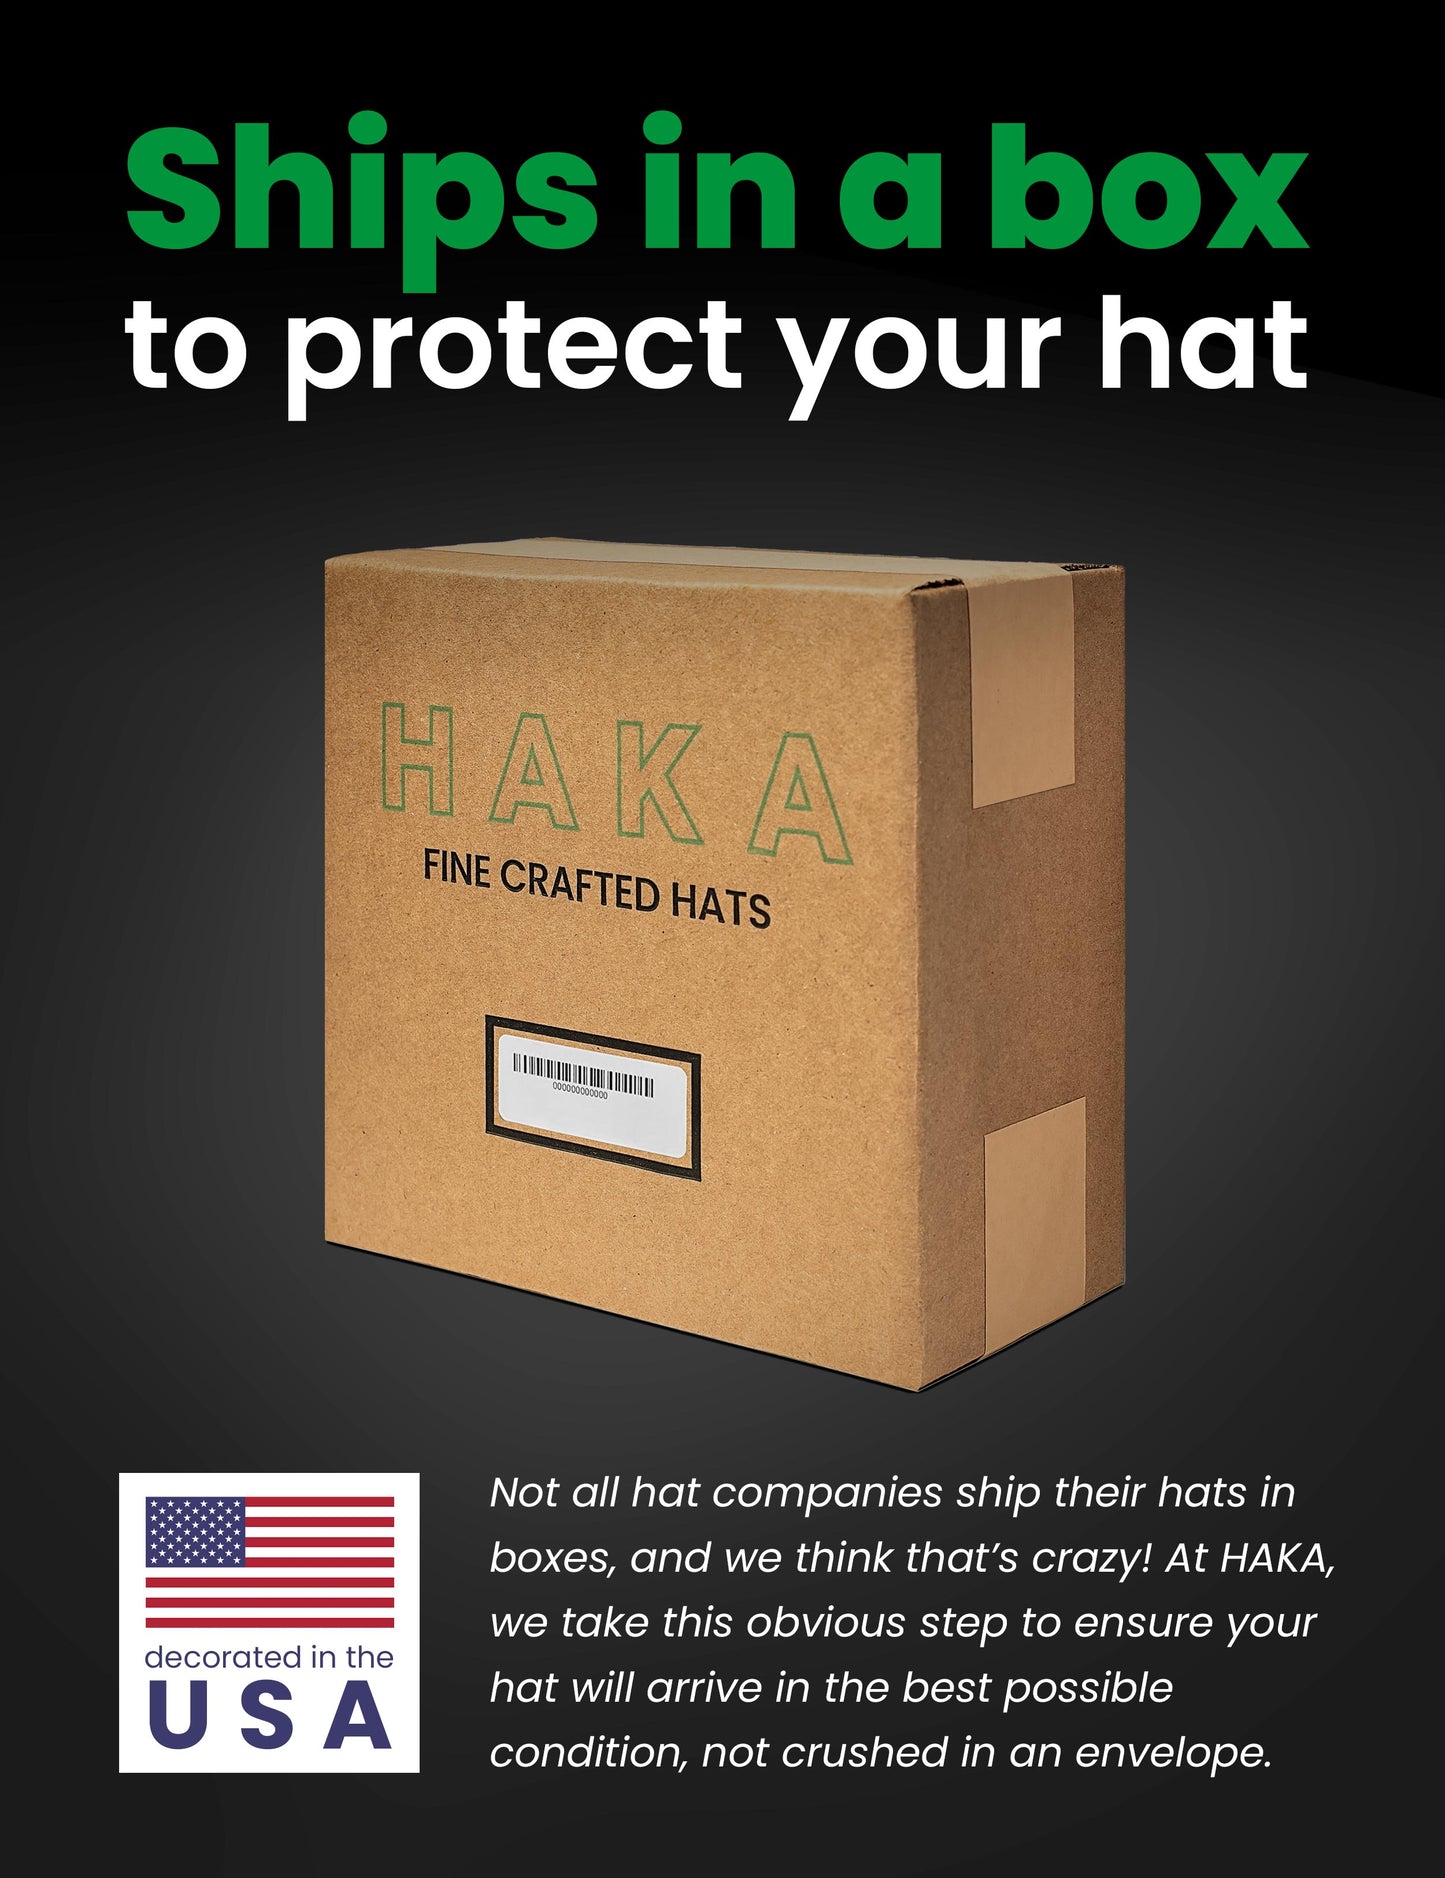 American Flag Trucker Hat  |  Gray White USA Snapback